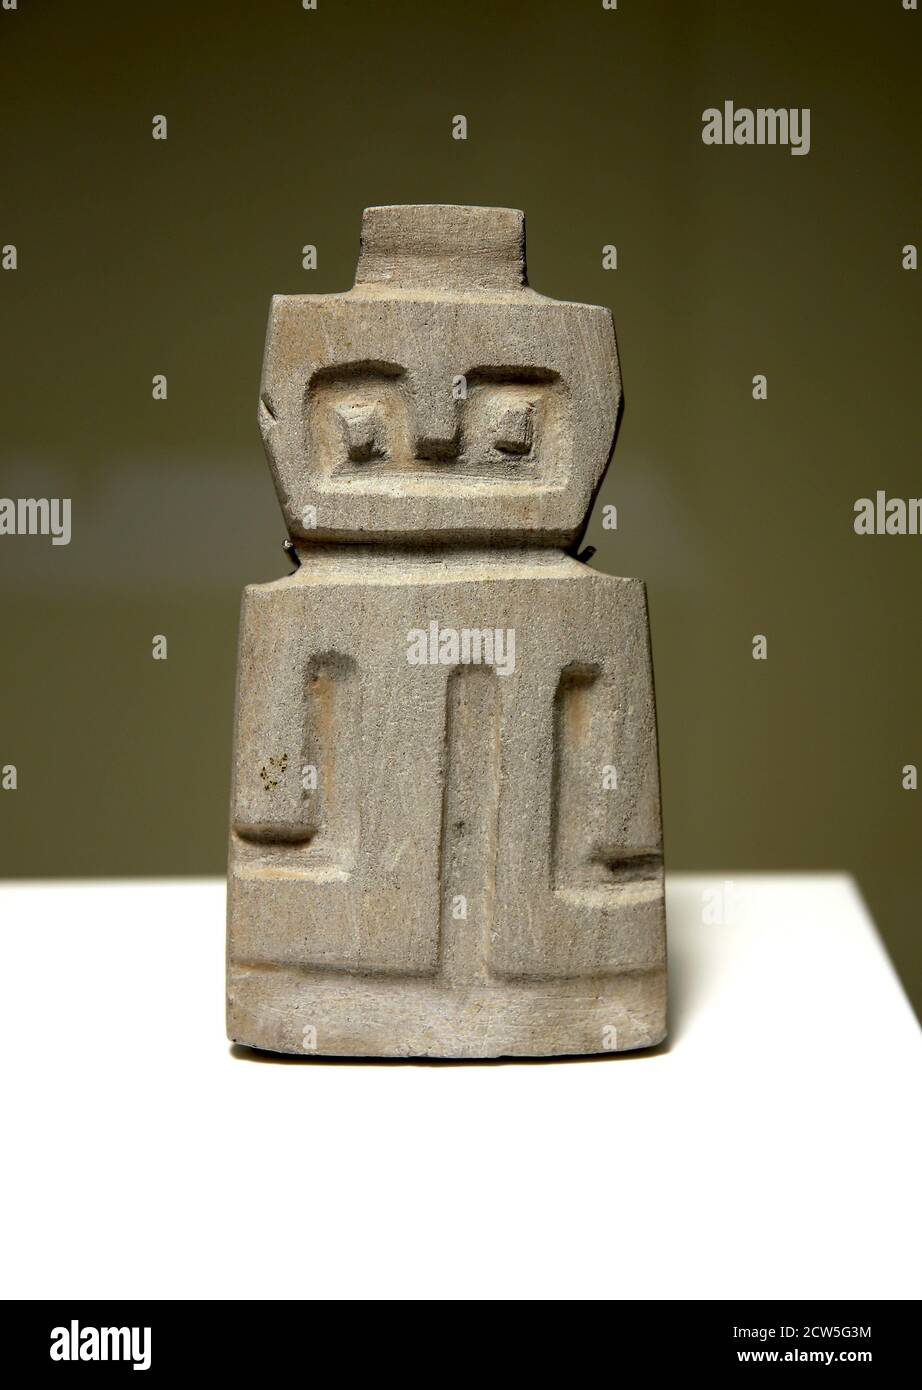 Valdivia idol figure ( 4000 - 2500 BC ). Valdivian culture. Coast of Ecuador. Carved Limestone. Museum of World Cultures, Barcelona. Spain. Stock Photo